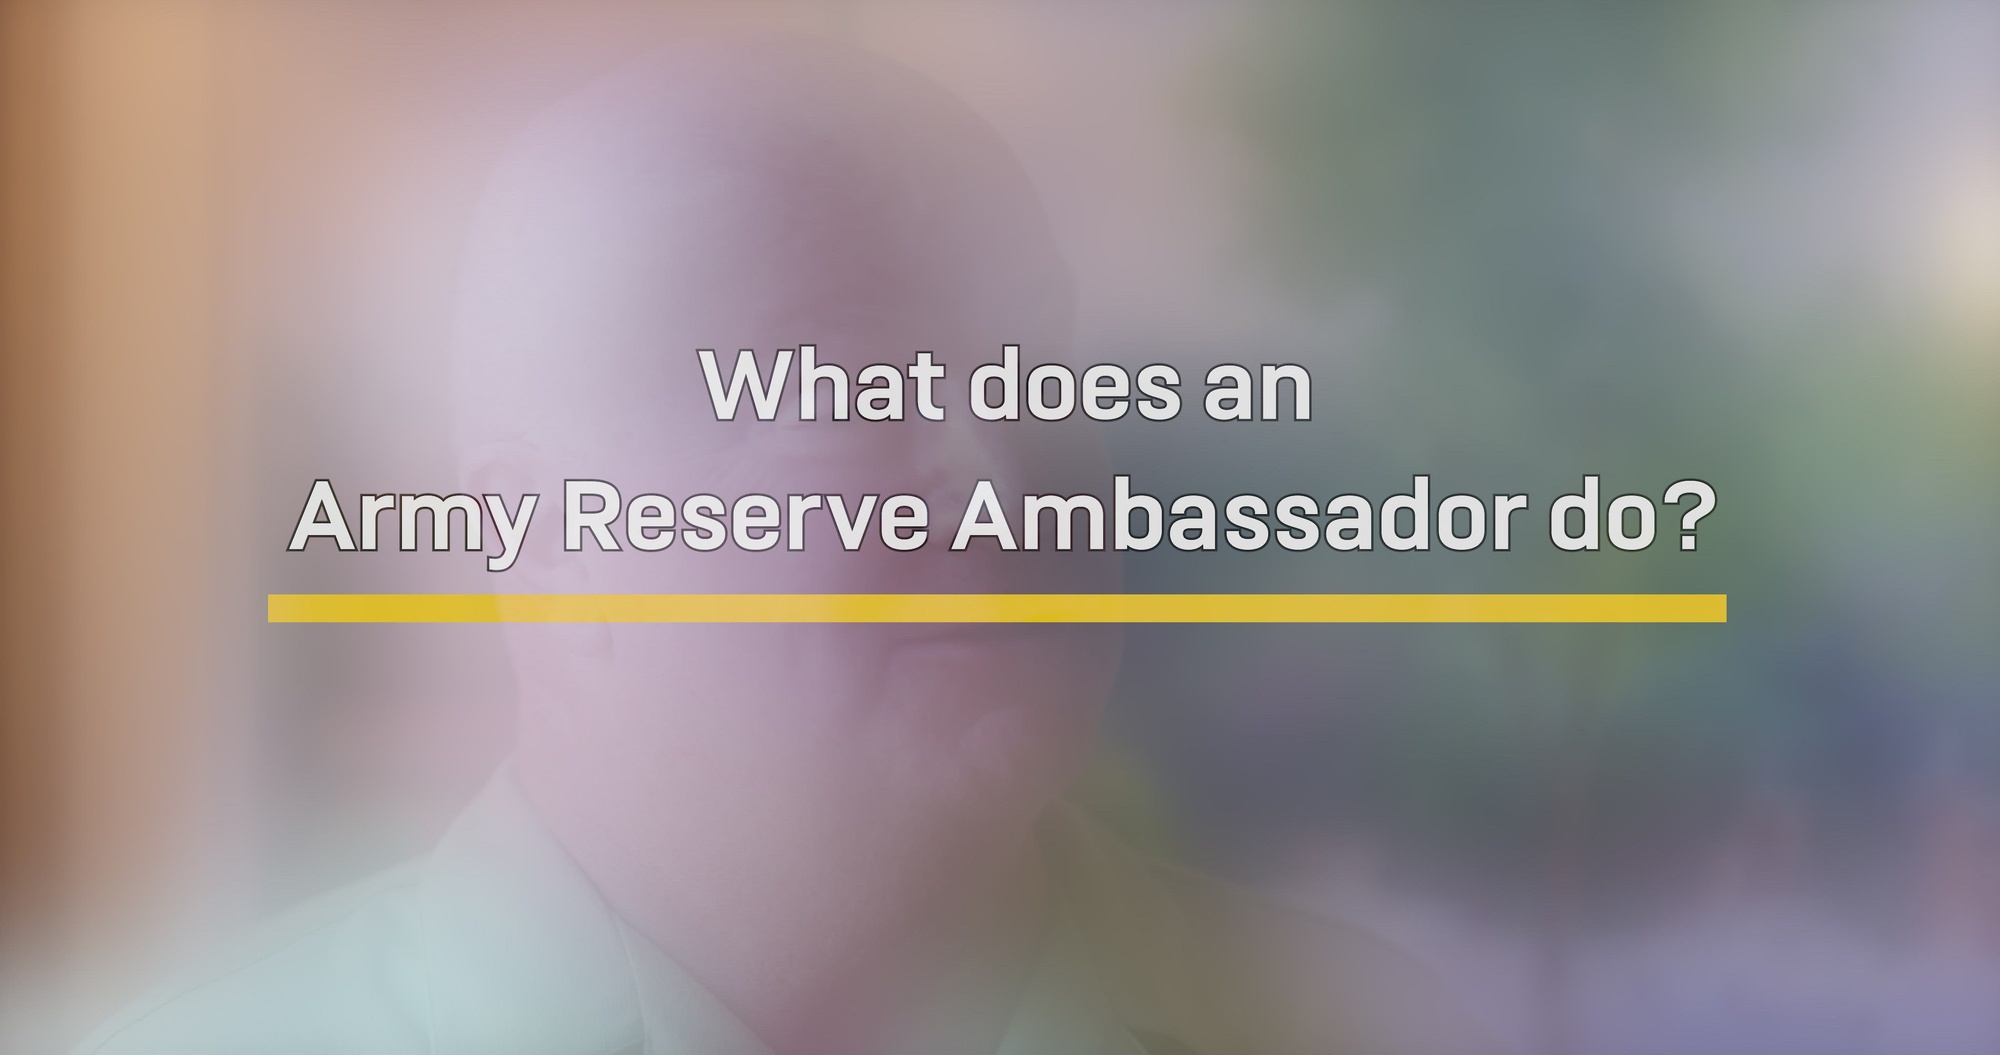 Army Reserve Ambassador Jim Bernet tells us what being an Army Reserve Ambassador entails.